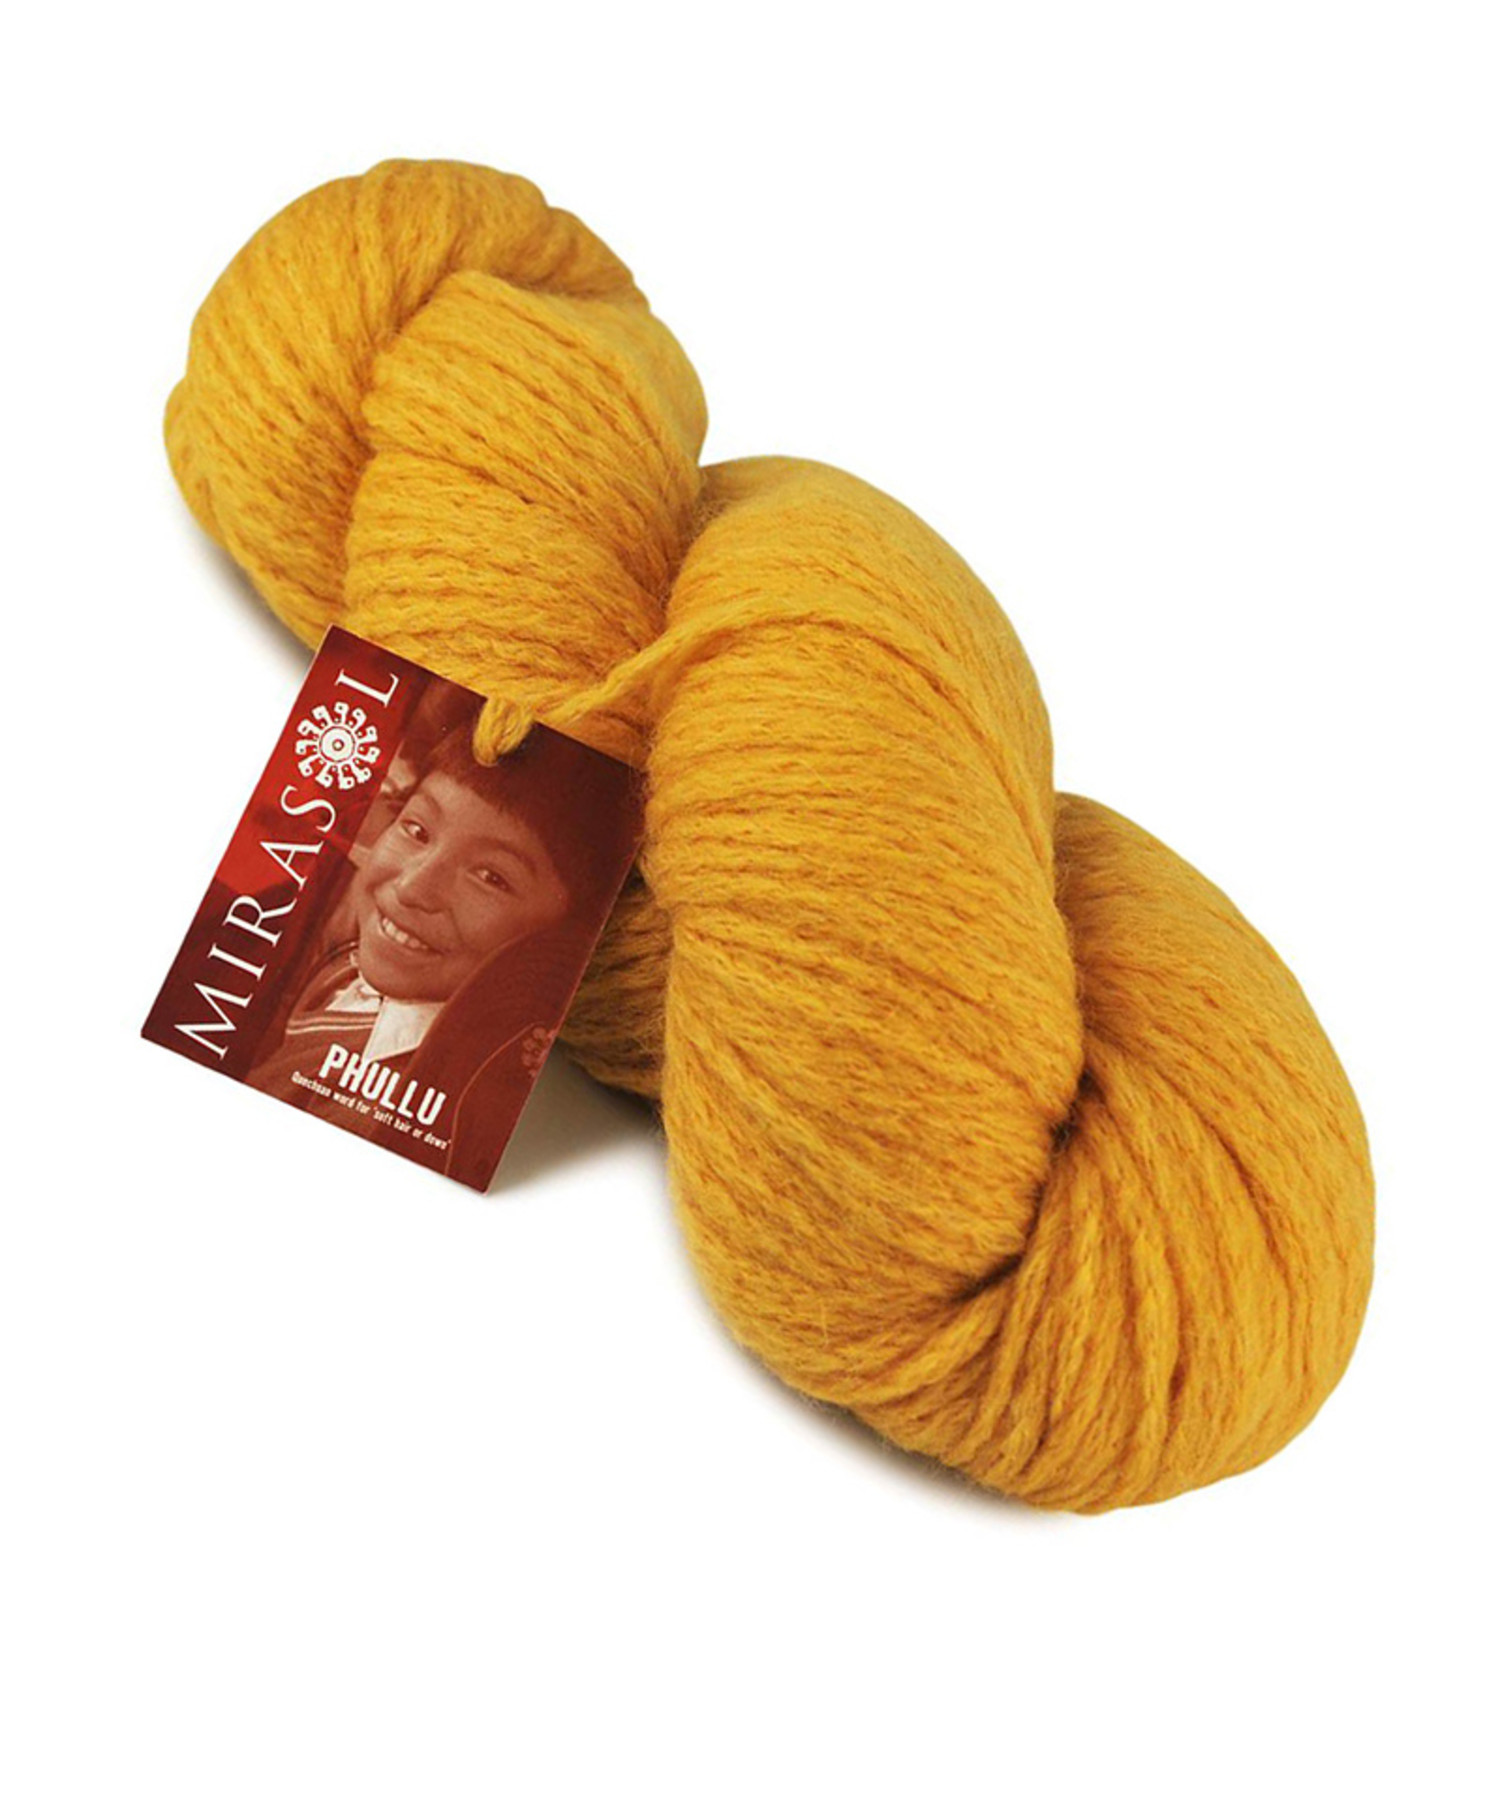 Melbourne Yarn, L: 92 m, dark yellow, 50 g/ 1 ball